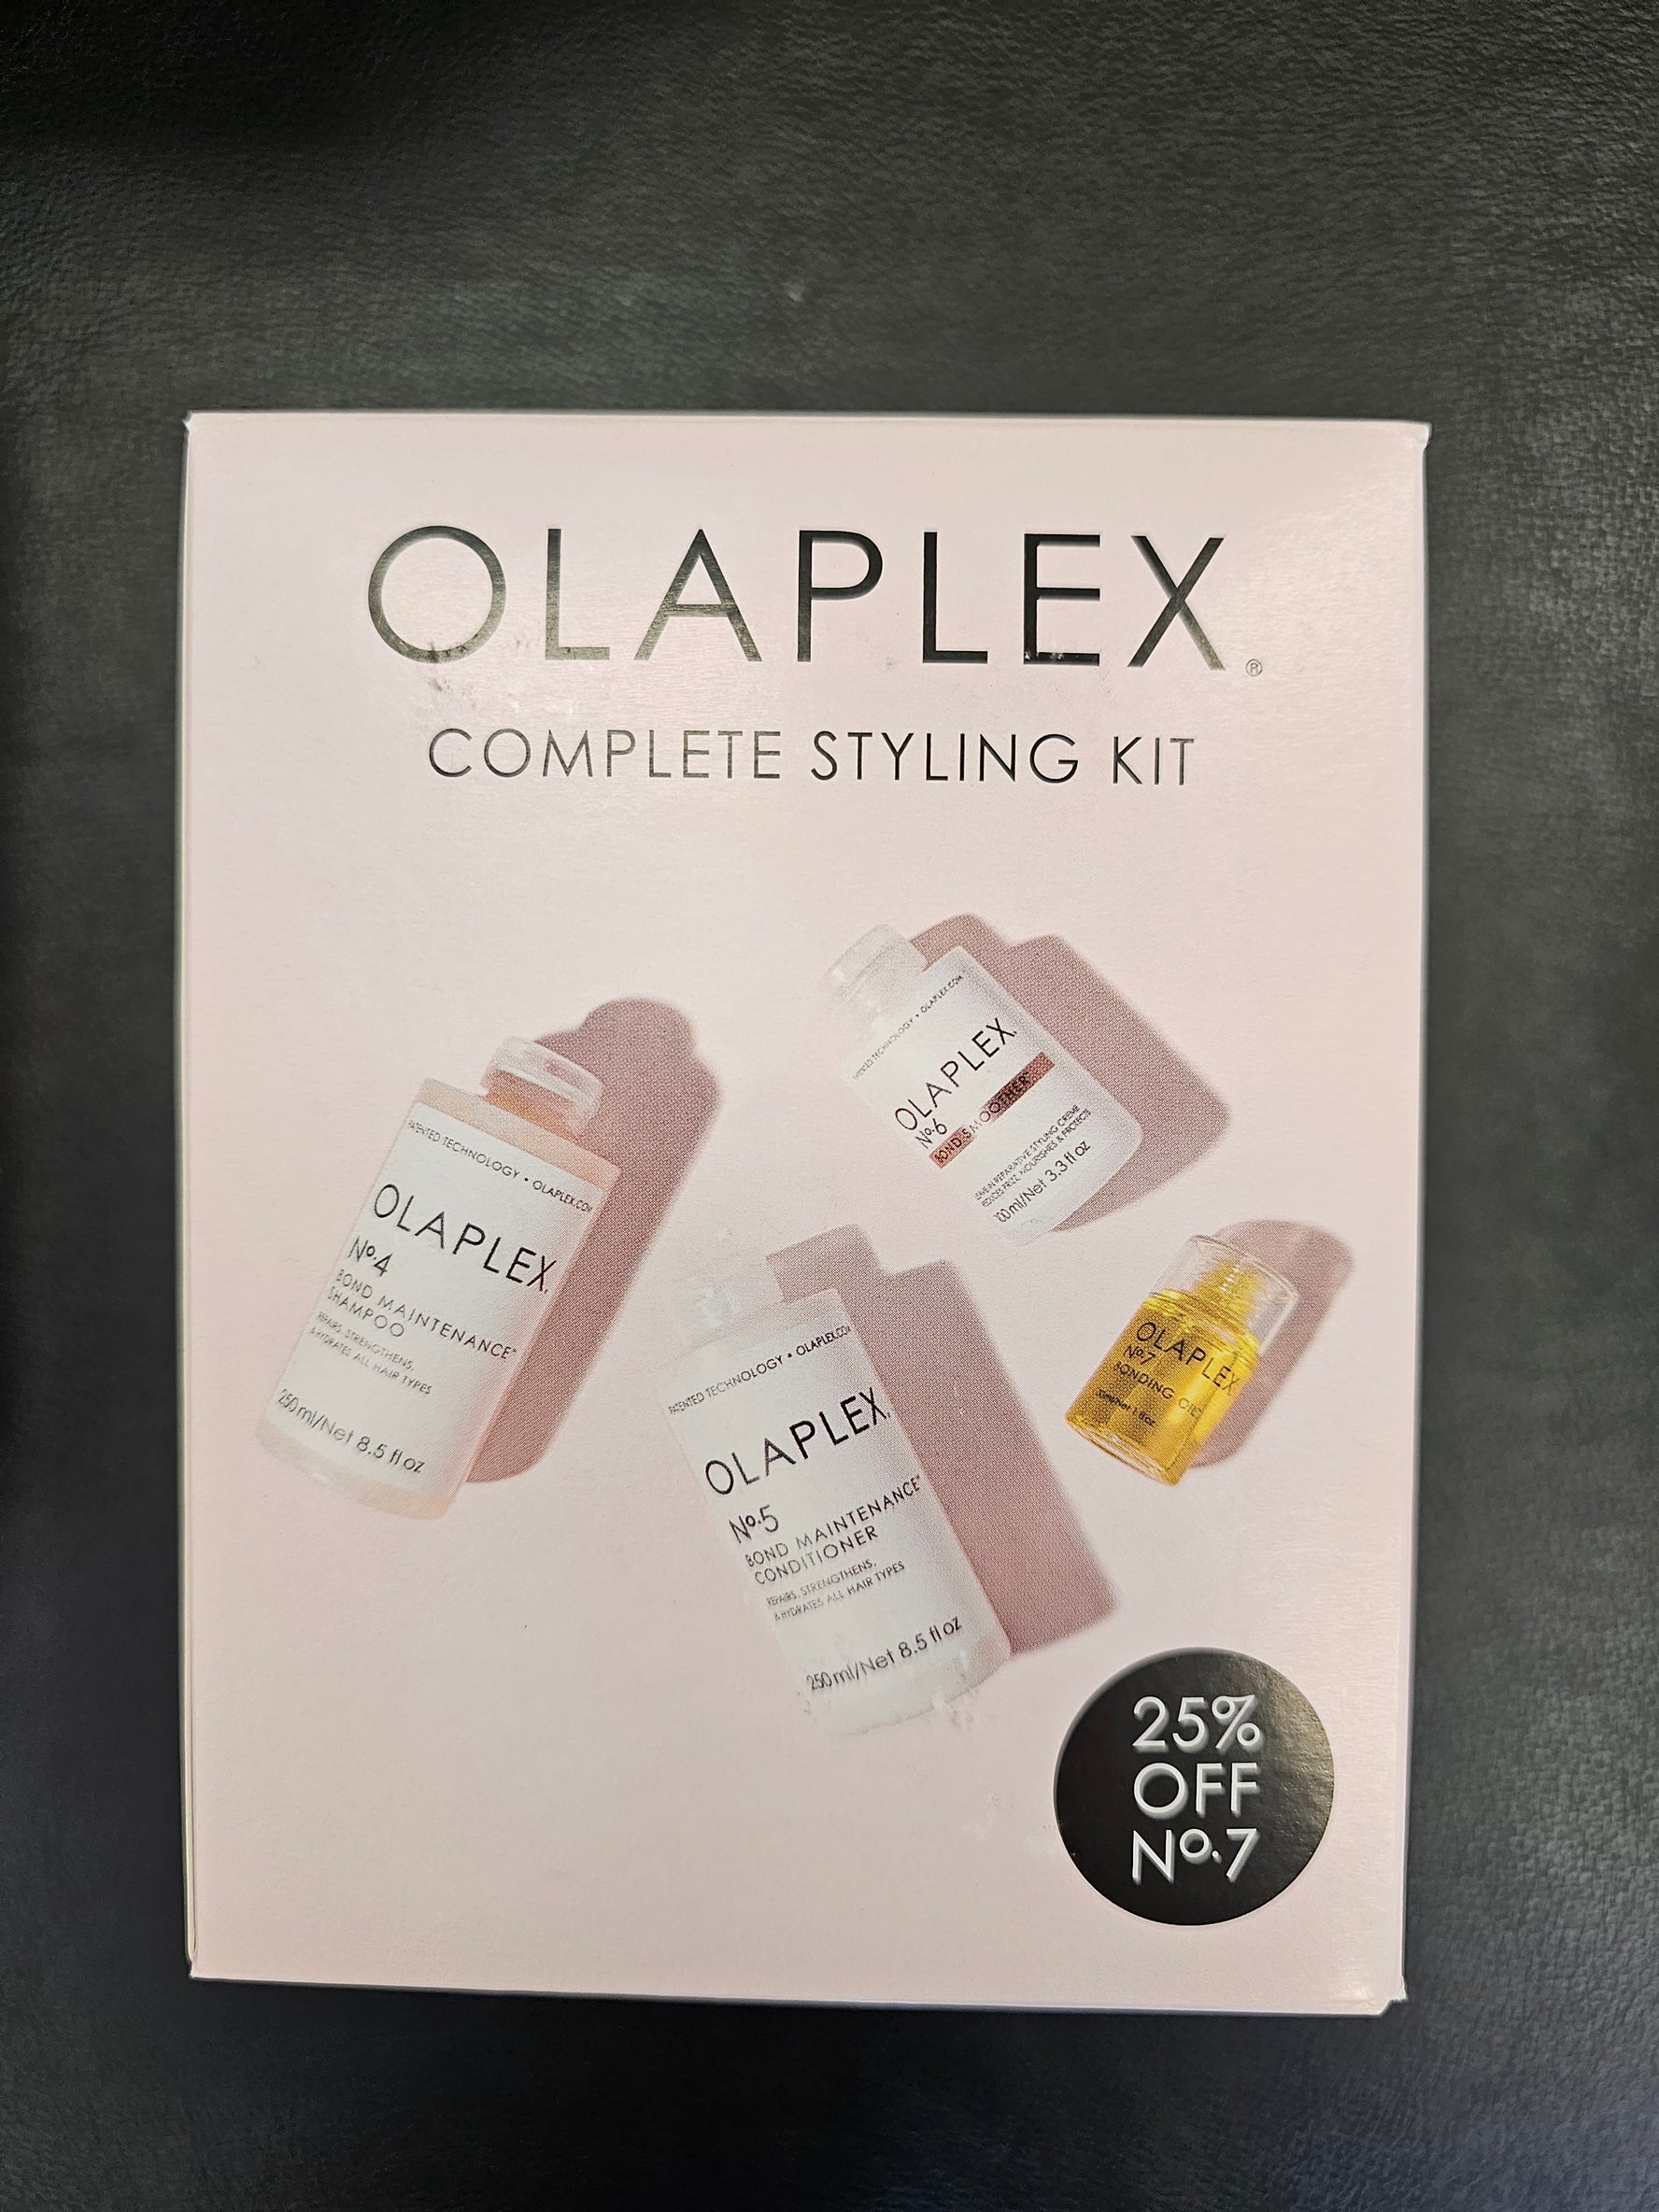 Olaplex complete styling kit